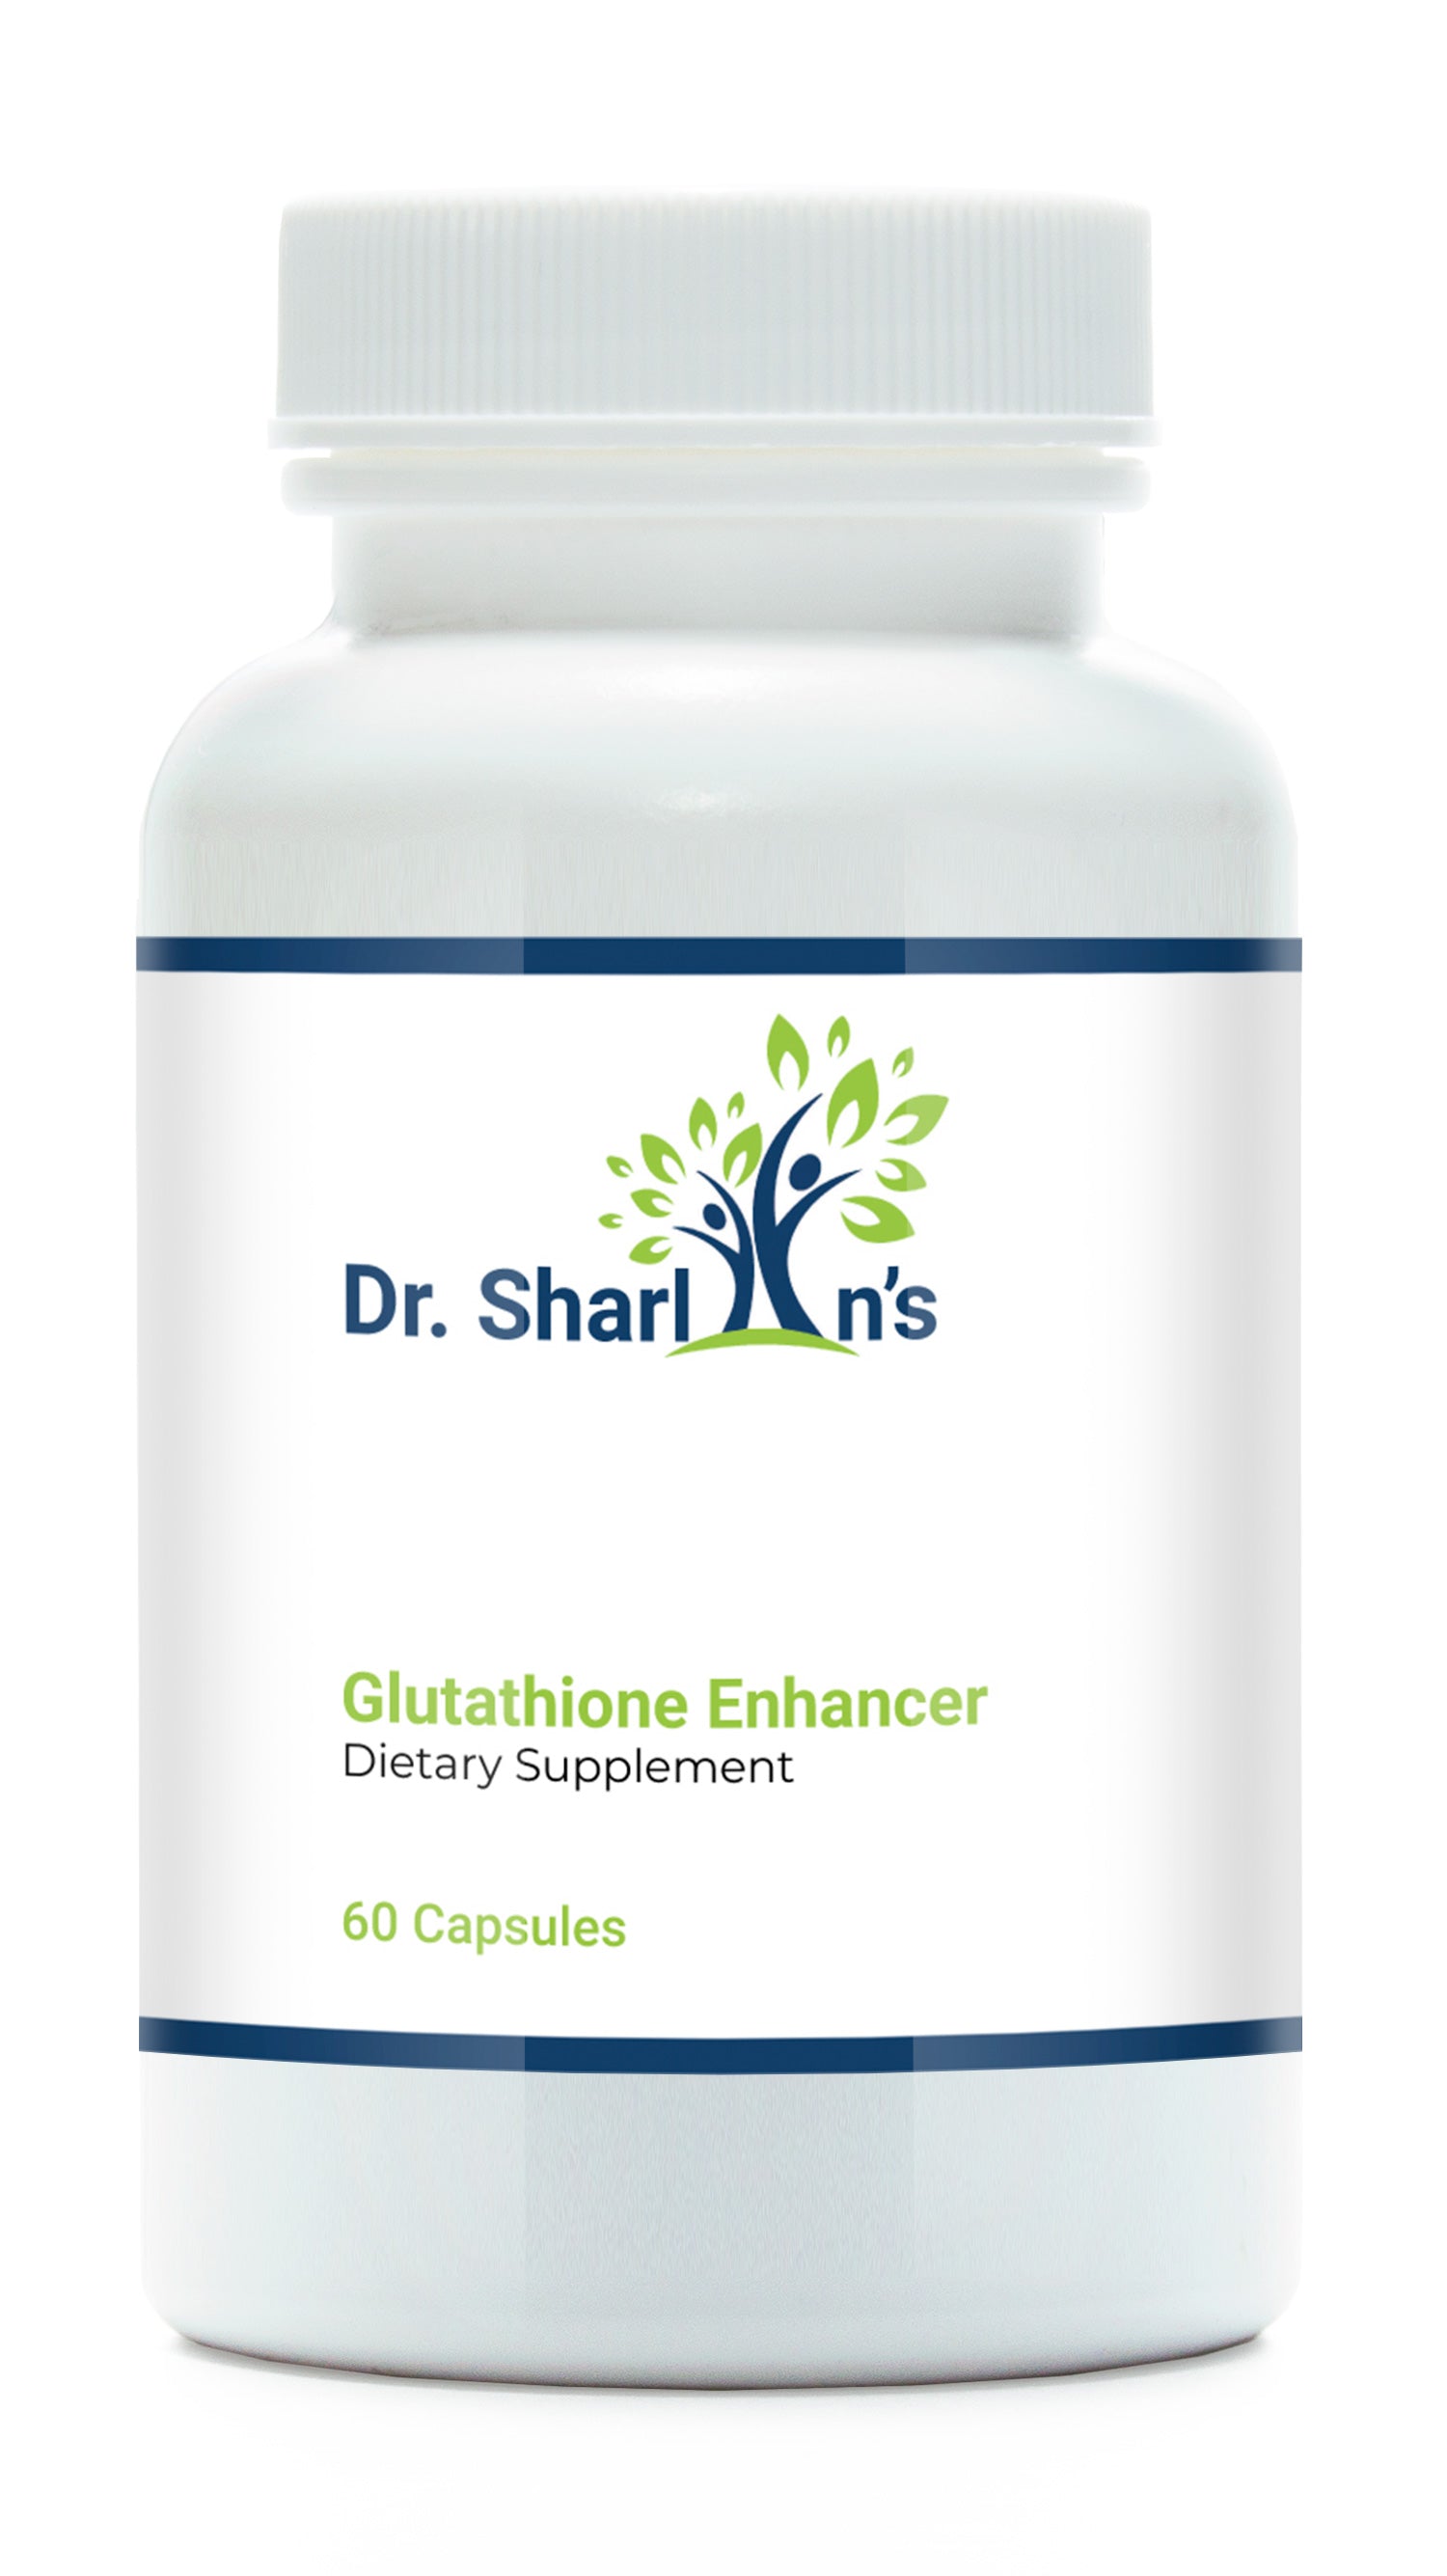 Glutathione Enhancer